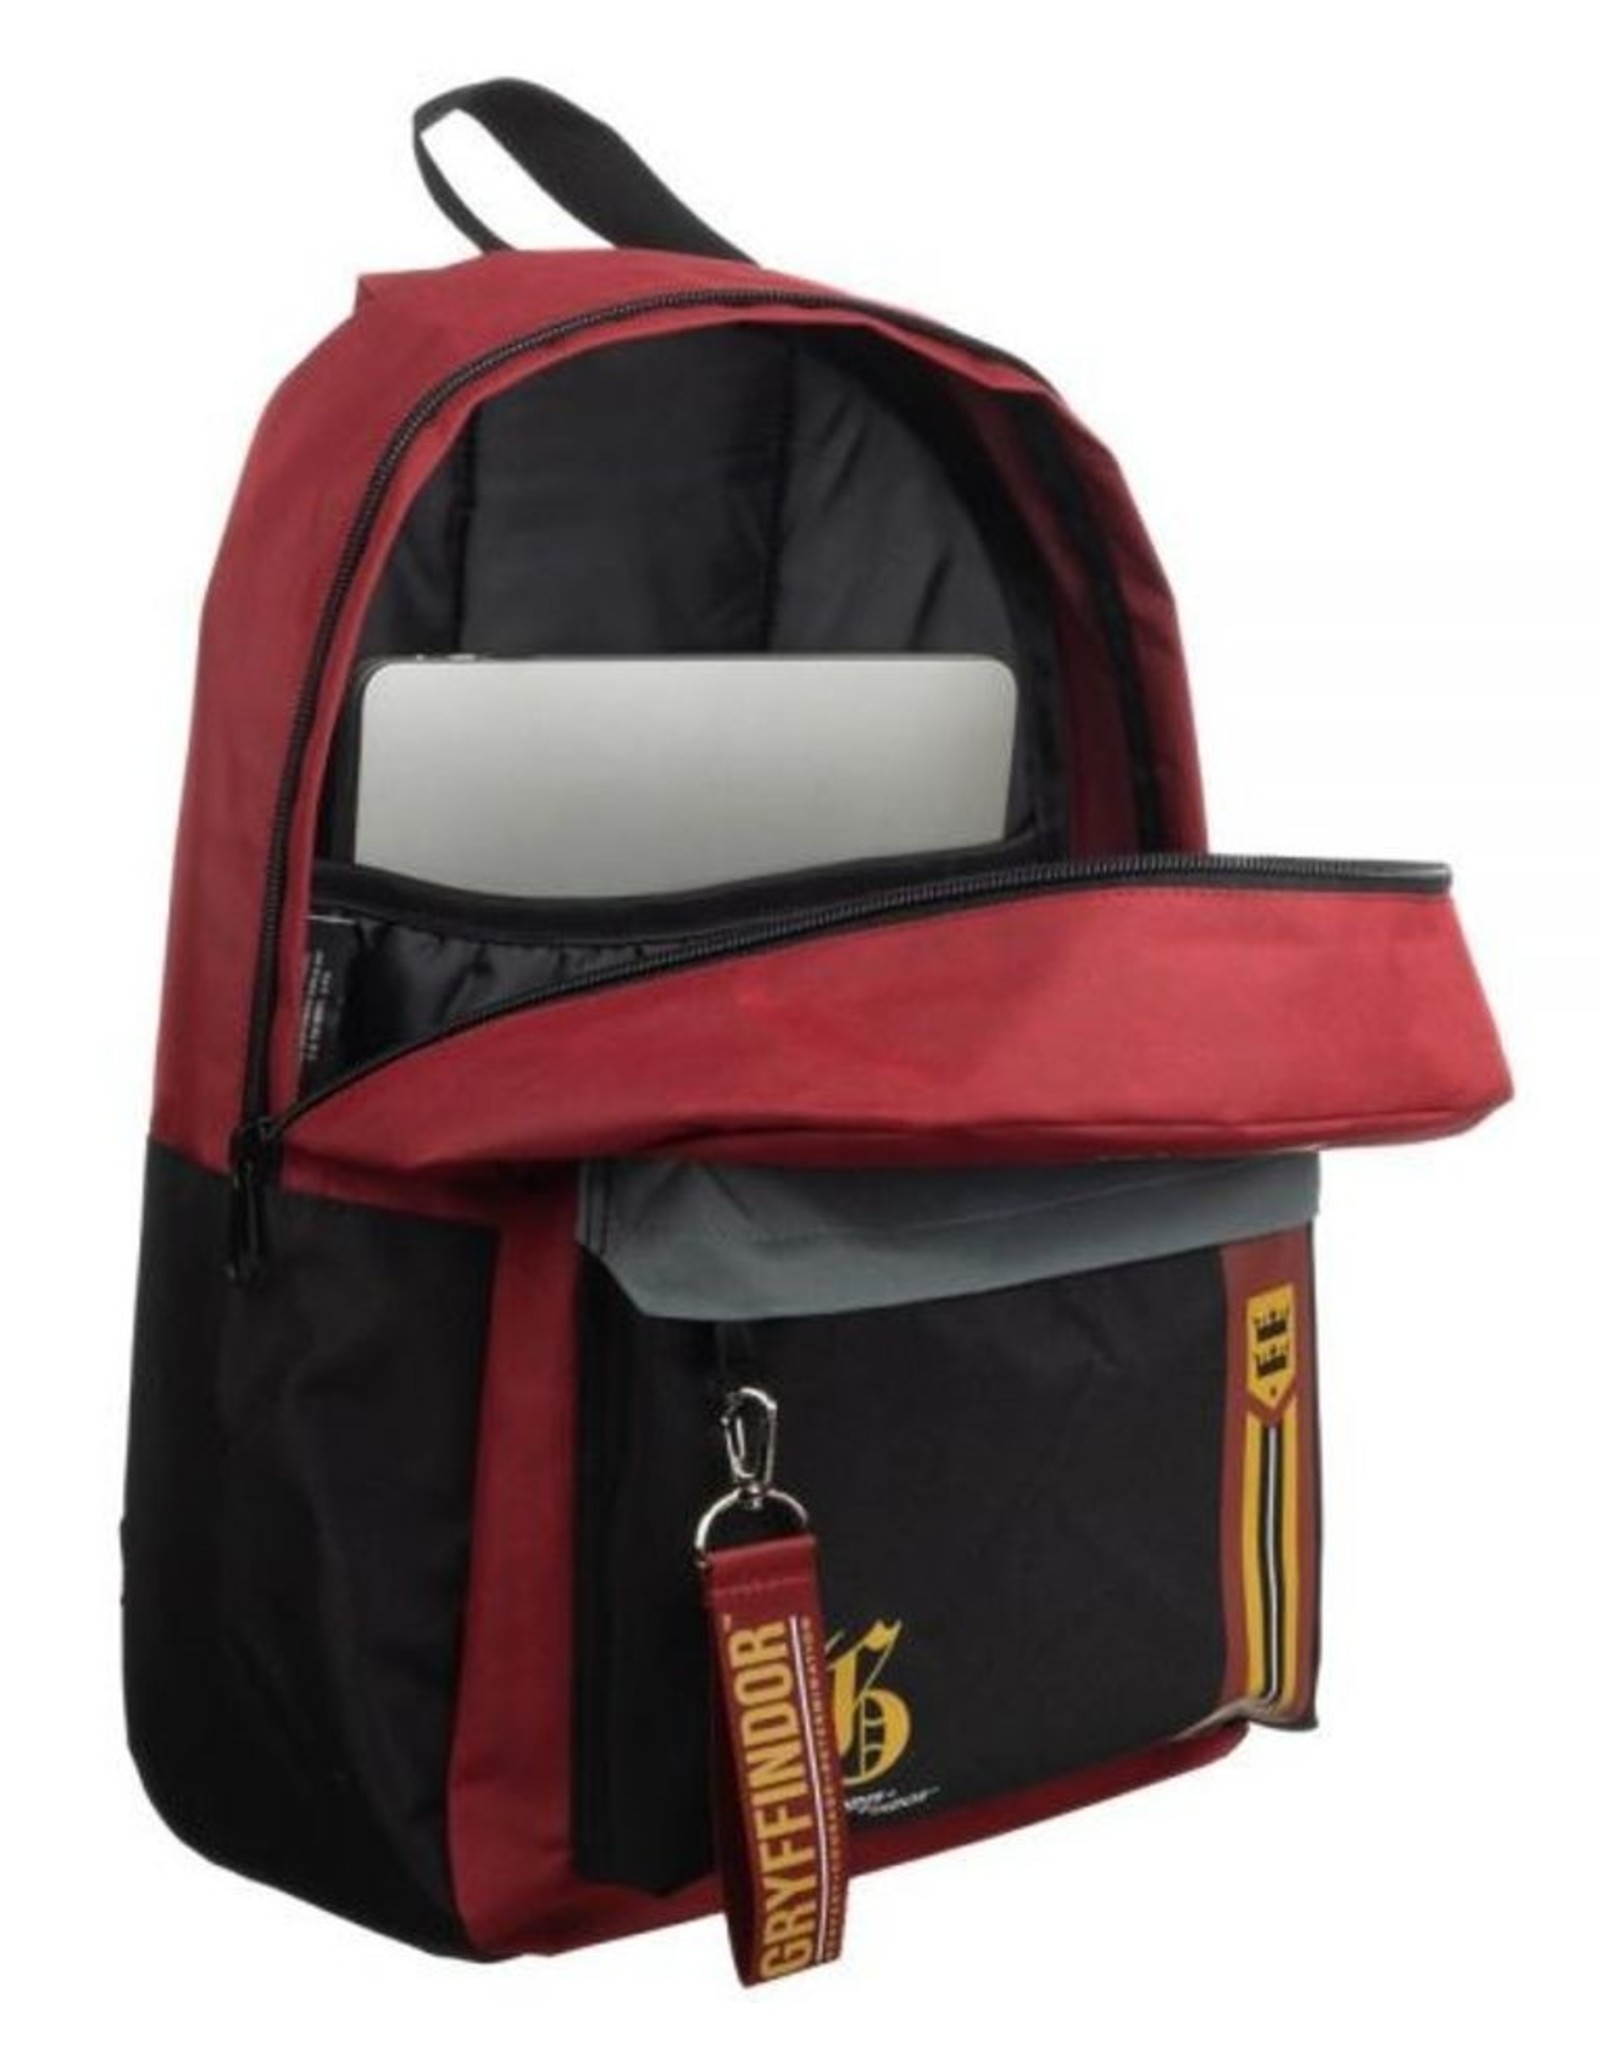 Harry Potter Harry Potter bags - Harry Potter Gryffindor backpack 40cm